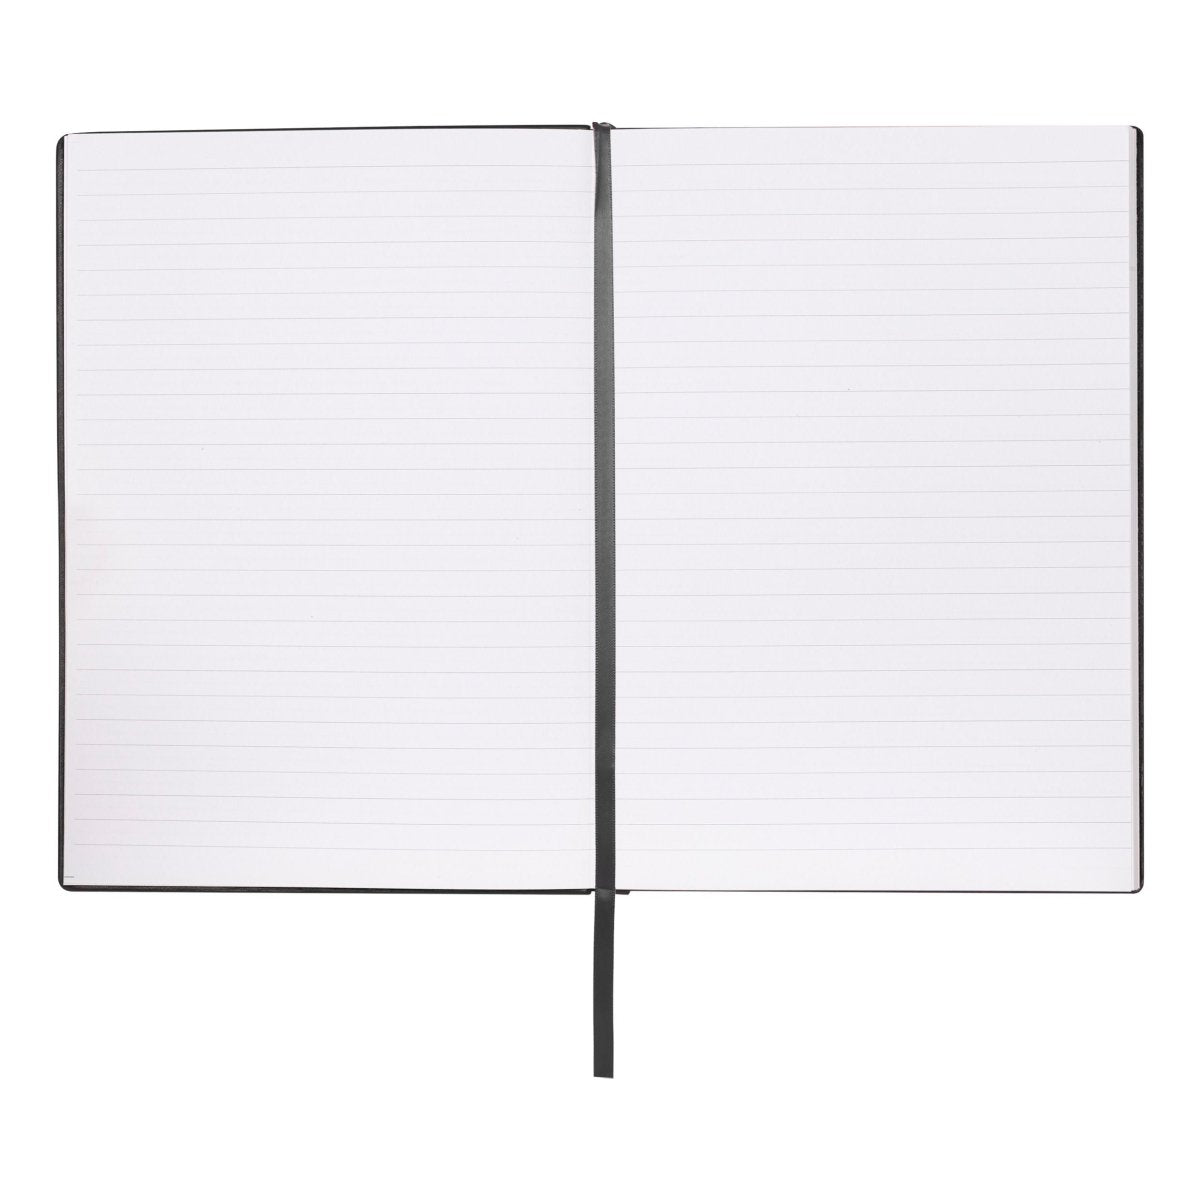 HUGO BOSS HNH121AL Σημειωματάριο A5 Essential Storyline Black Notebook - Κοσμηματοπωλείο Goldy